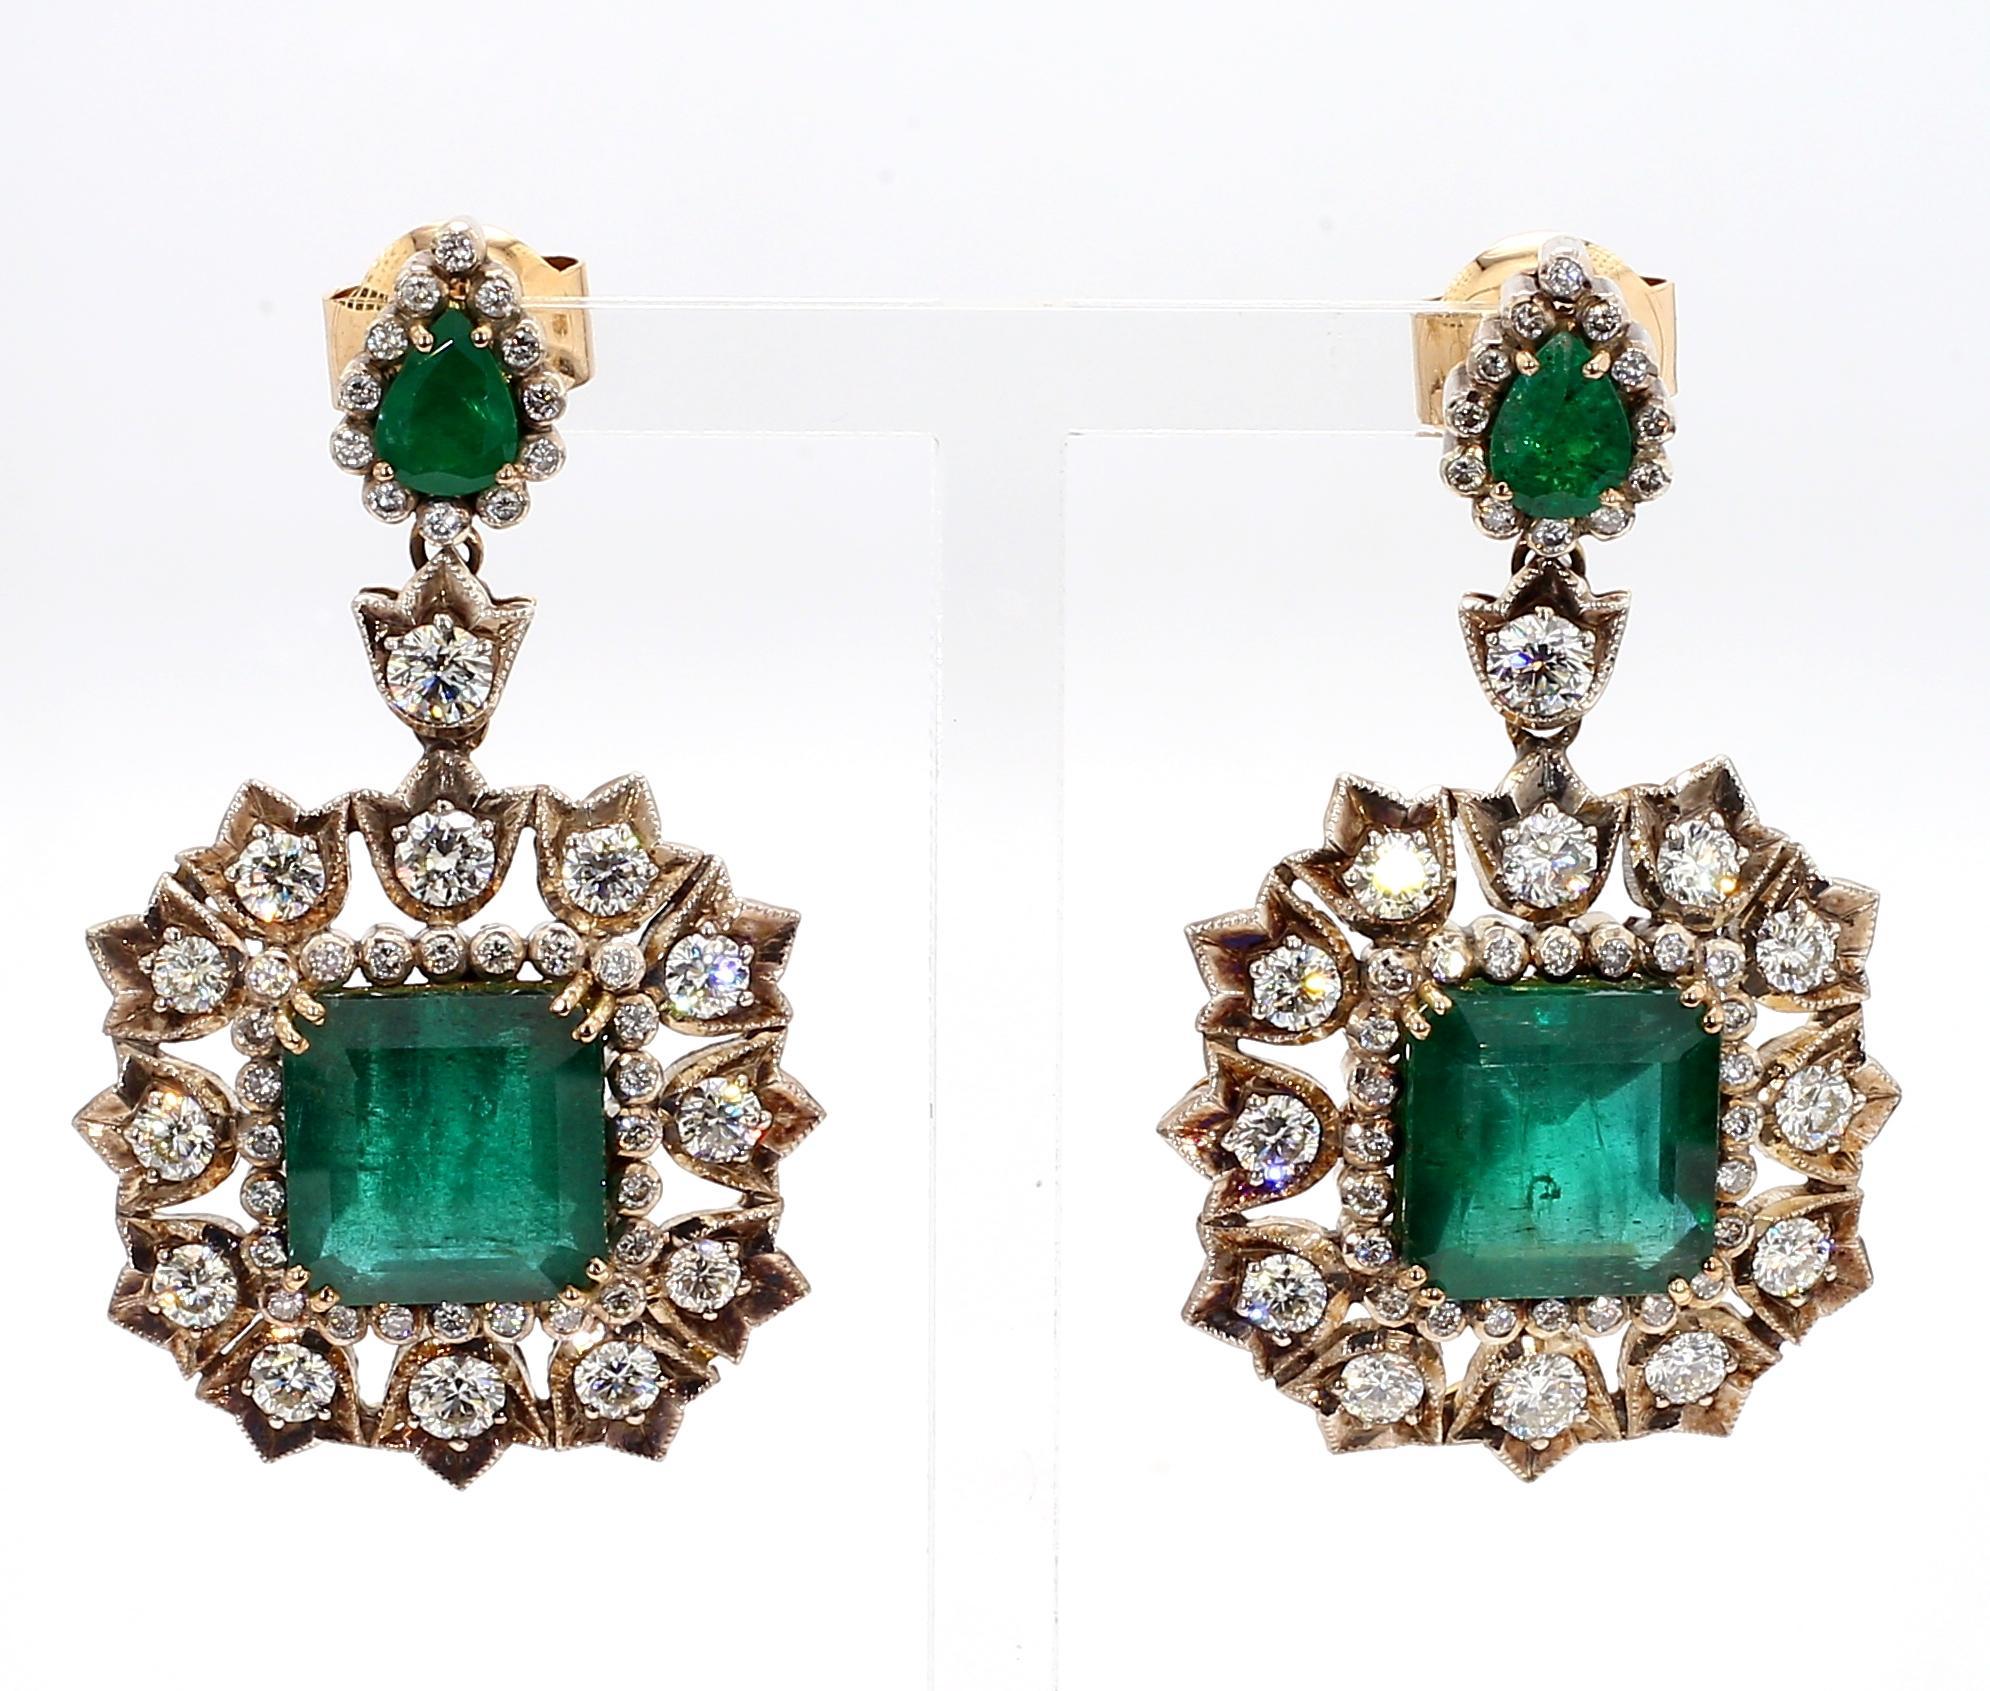 The York - 16.1 Carat Zambian Emerald and 5.4 Carat Diamond Earrings 18K Gold For Sale 5